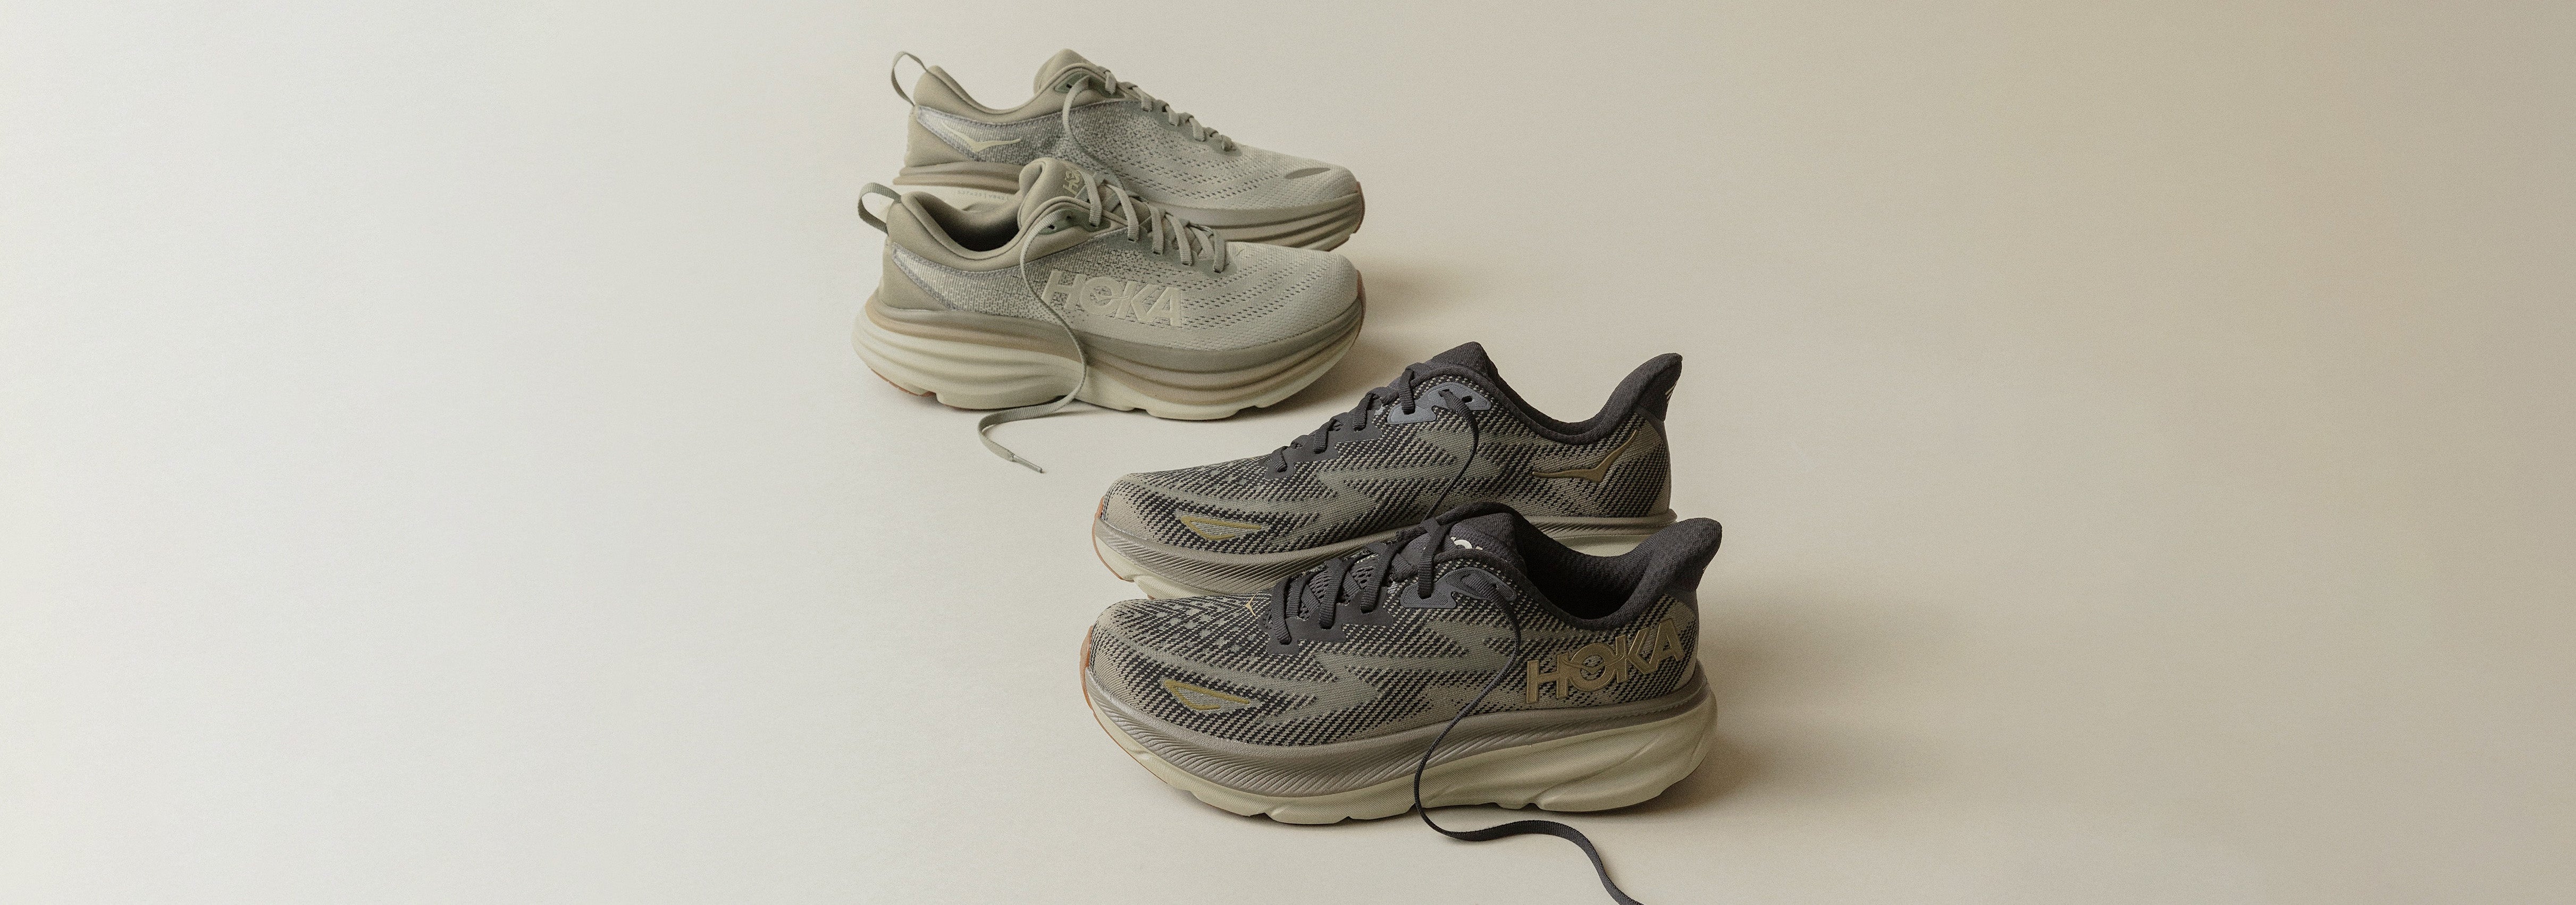 adidas galaxar run shoes unisex